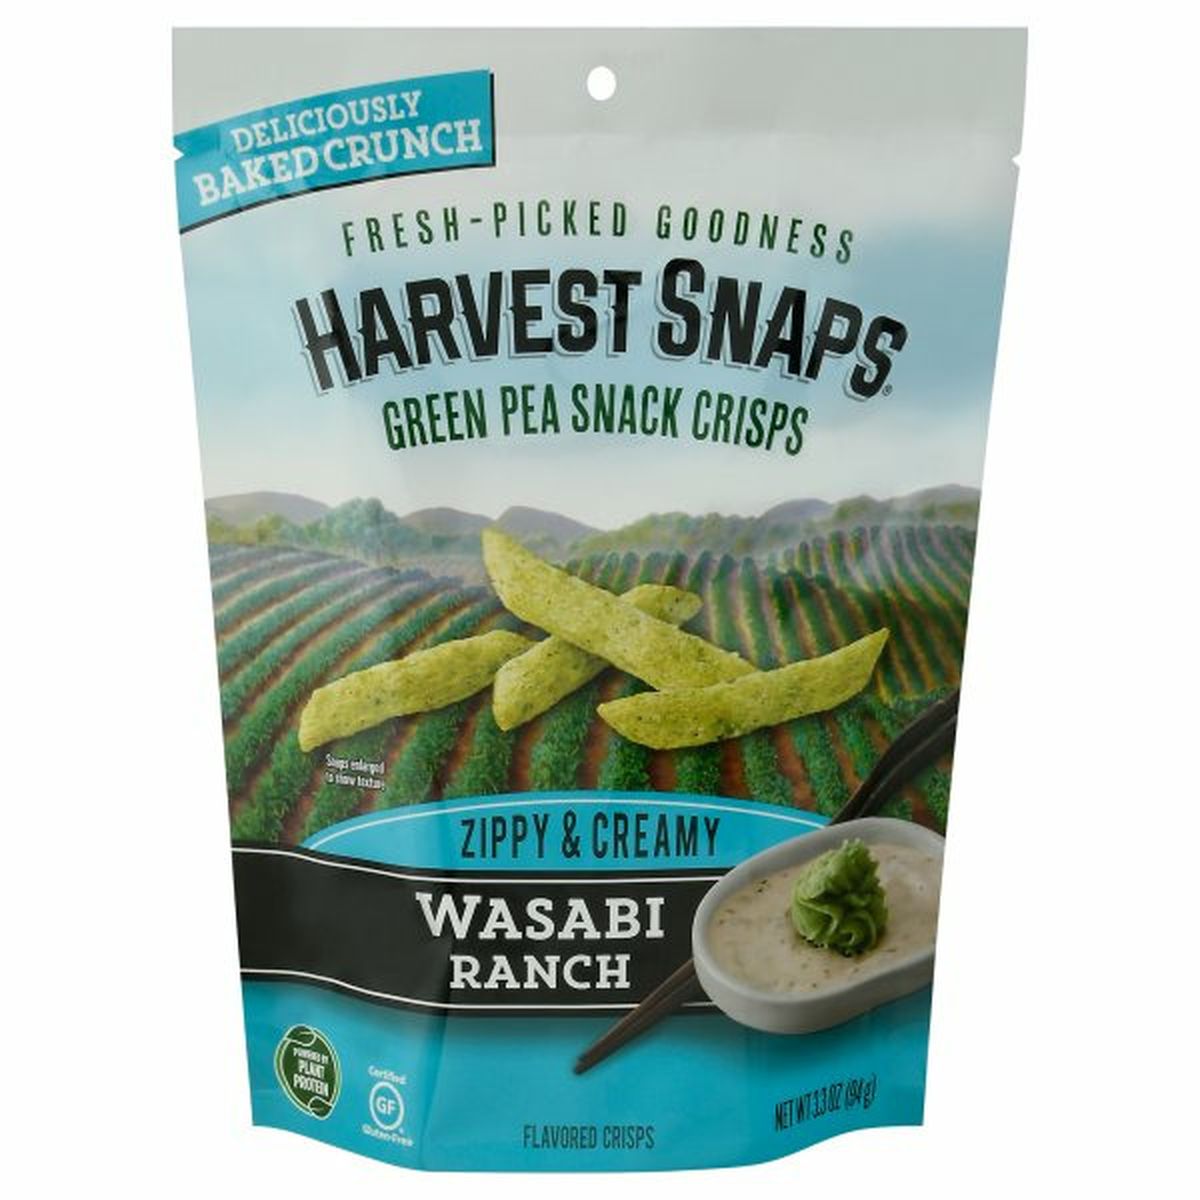 Calories in Harvest Snaps Green Pea Snack Crisps, Wasabi Ranch, Zippy & Creamy